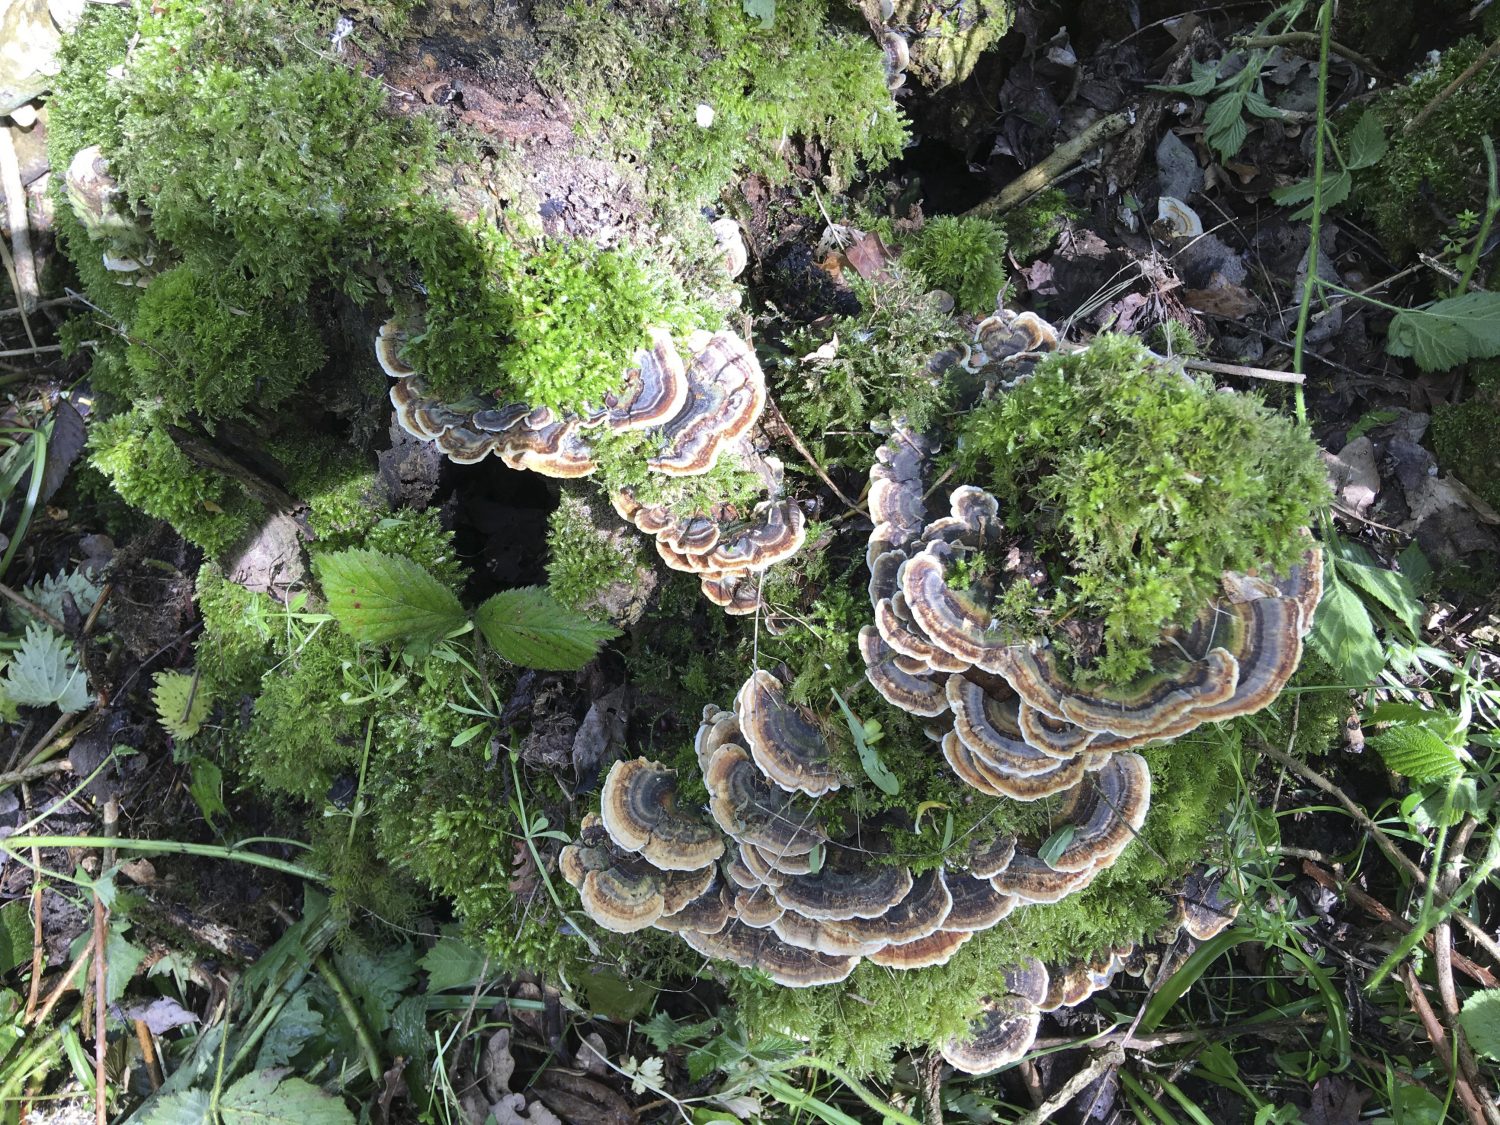 Fungus on a chestnut stump